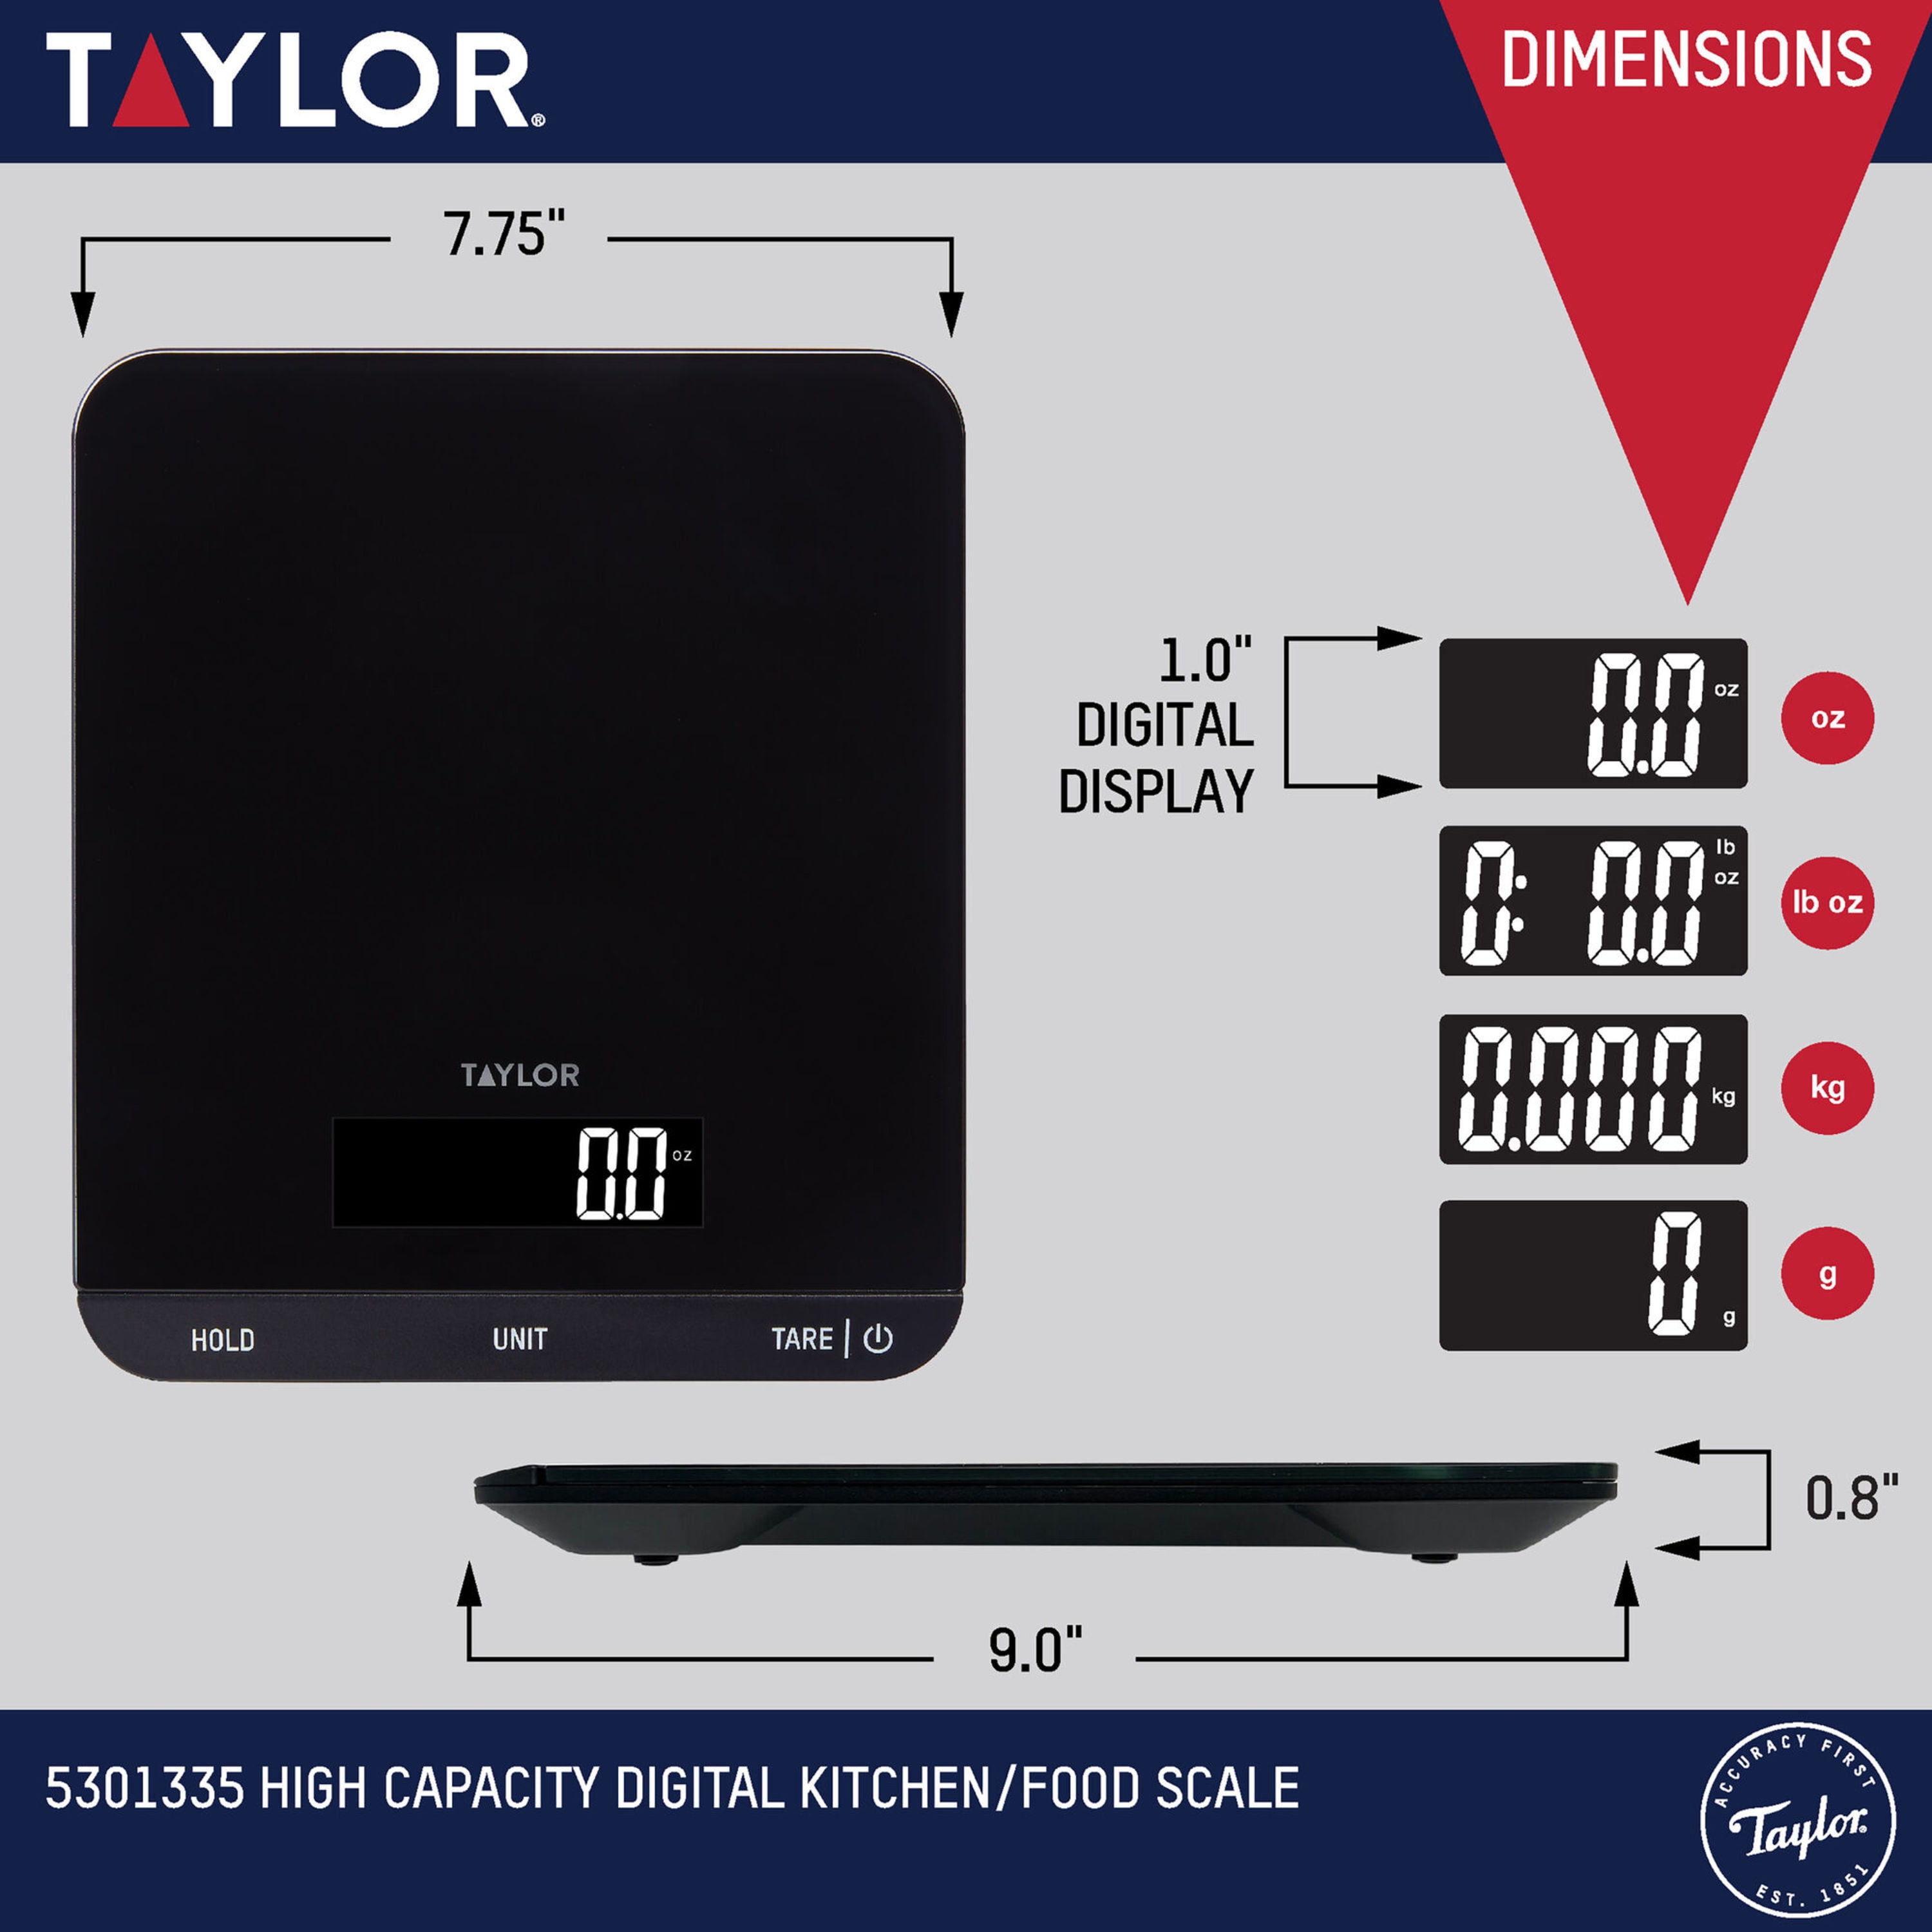 Taylor 330 lb. Digital Bathroom Scale Chrome - On Sale - Bed Bath & Beyond  - 3389556